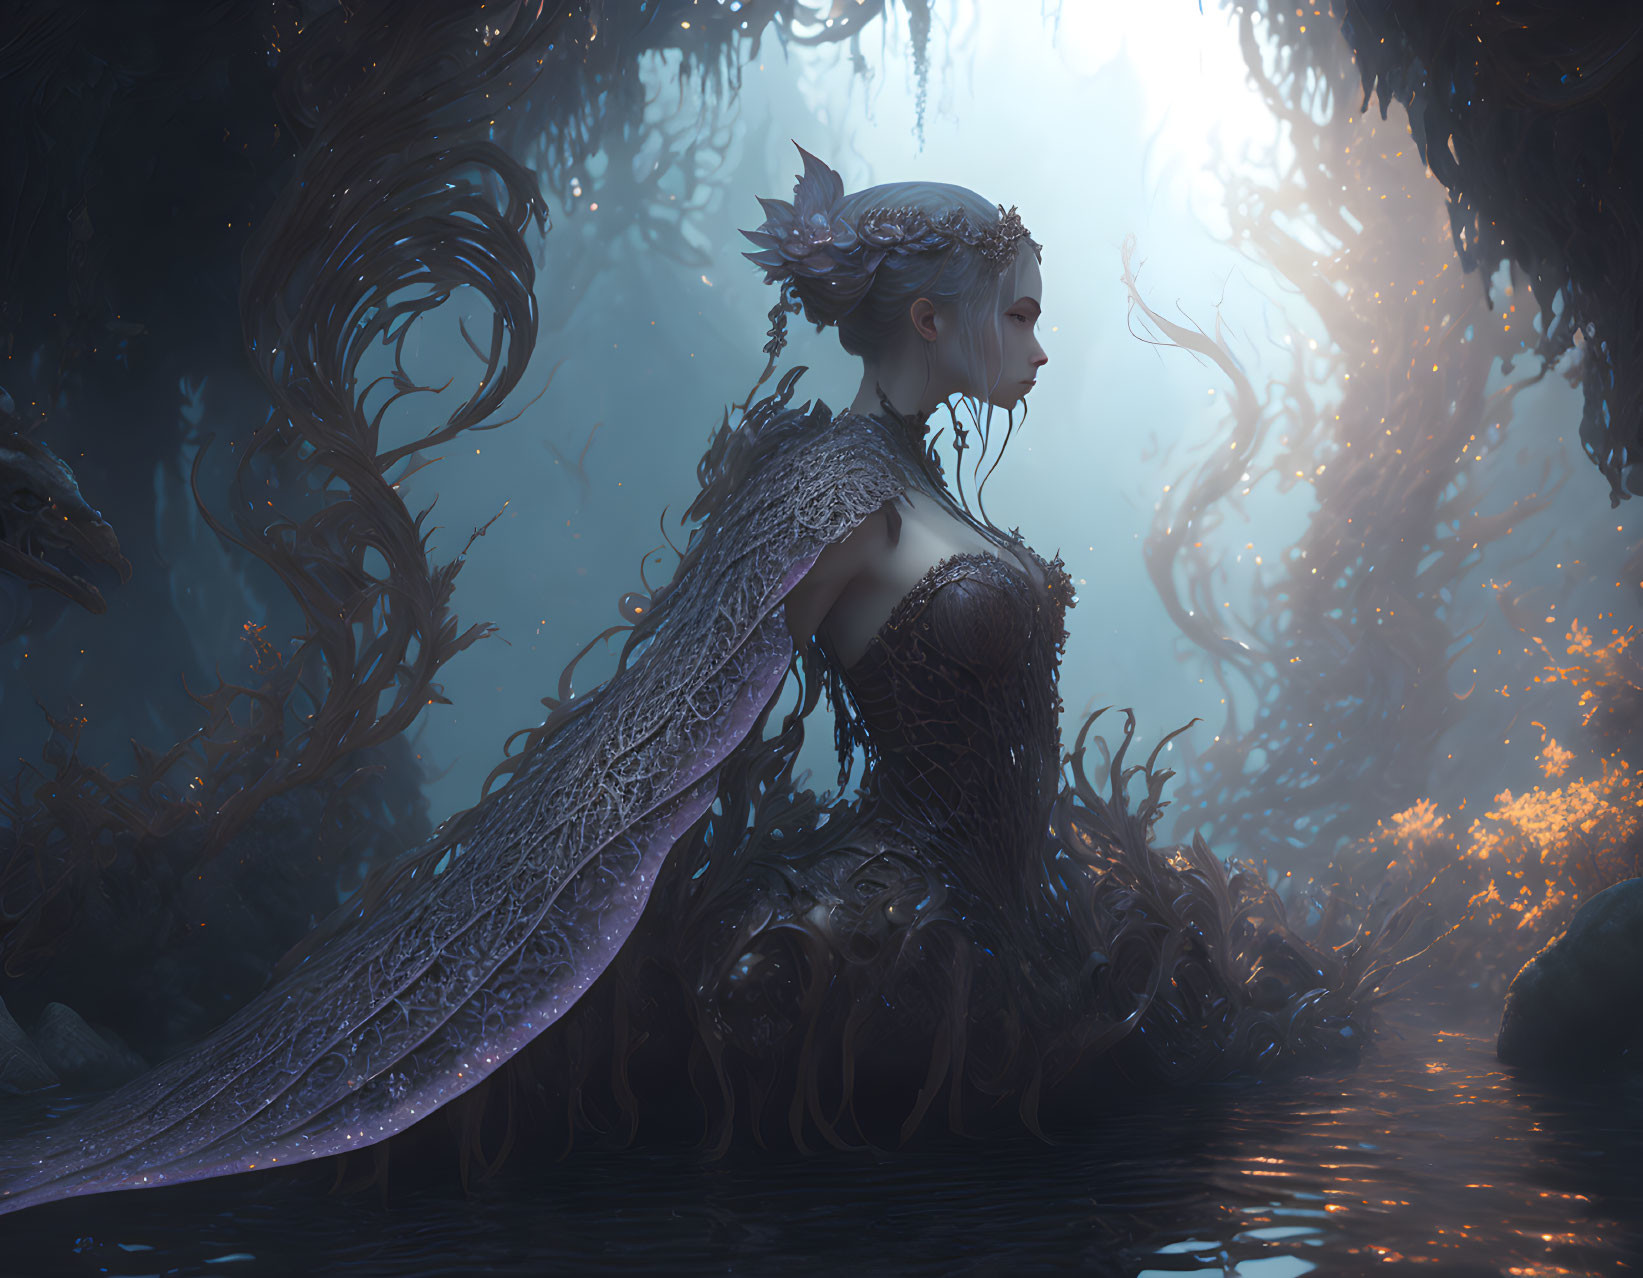 Mystical elf queen in elaborate armor in enchanted forest